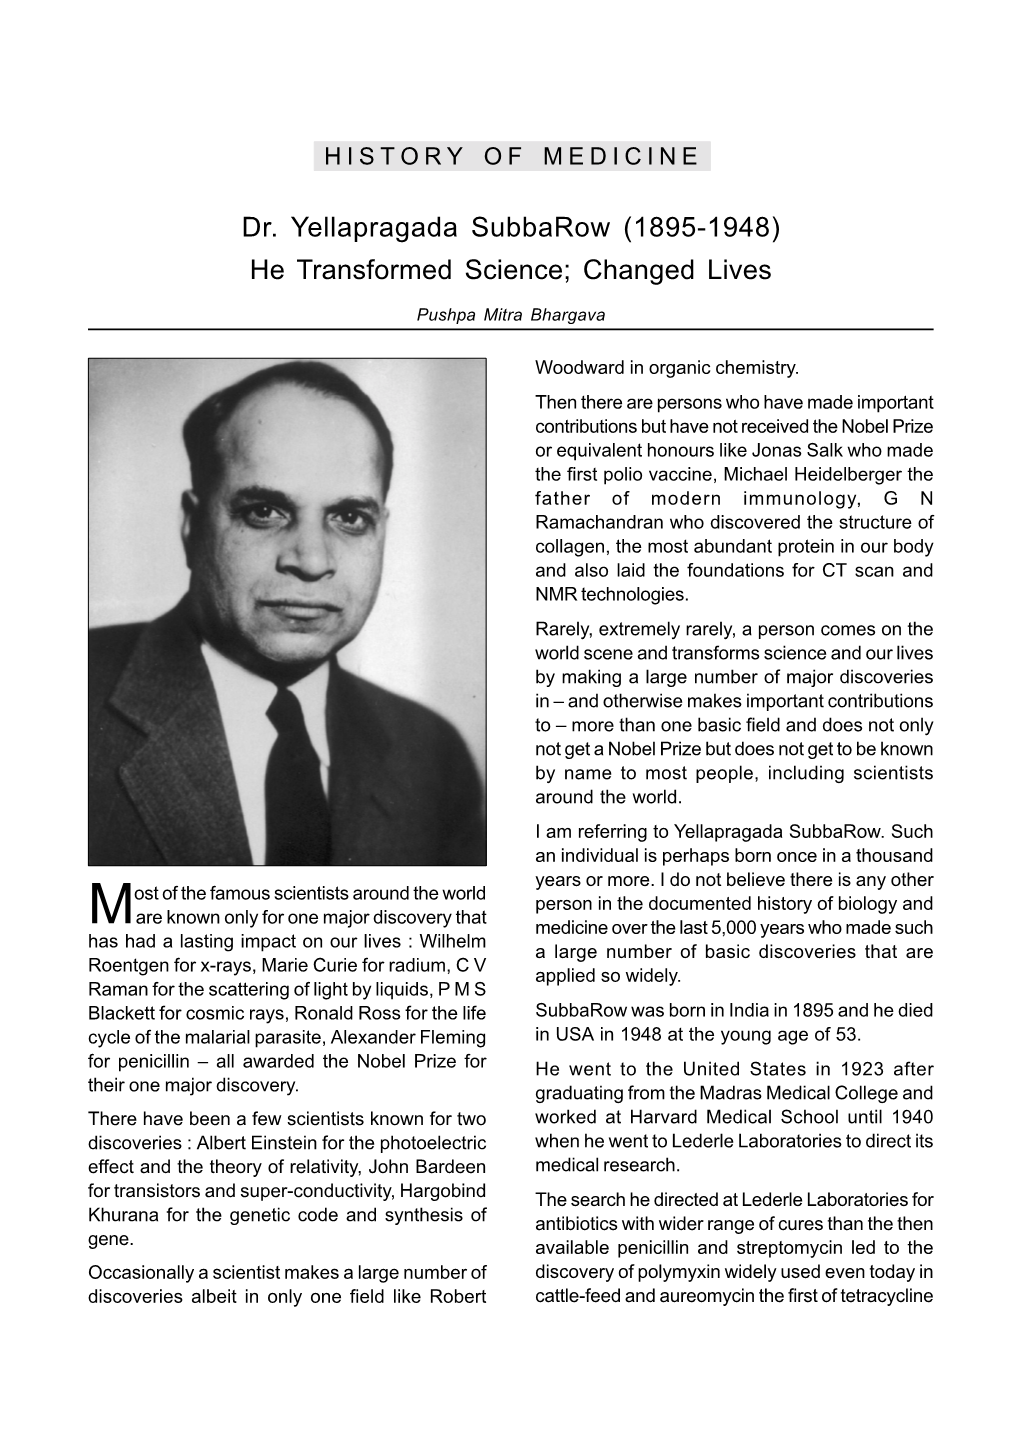 Dr. Yellapragada Subbarow (1895-1948) He Transformed Science; Changed Lives